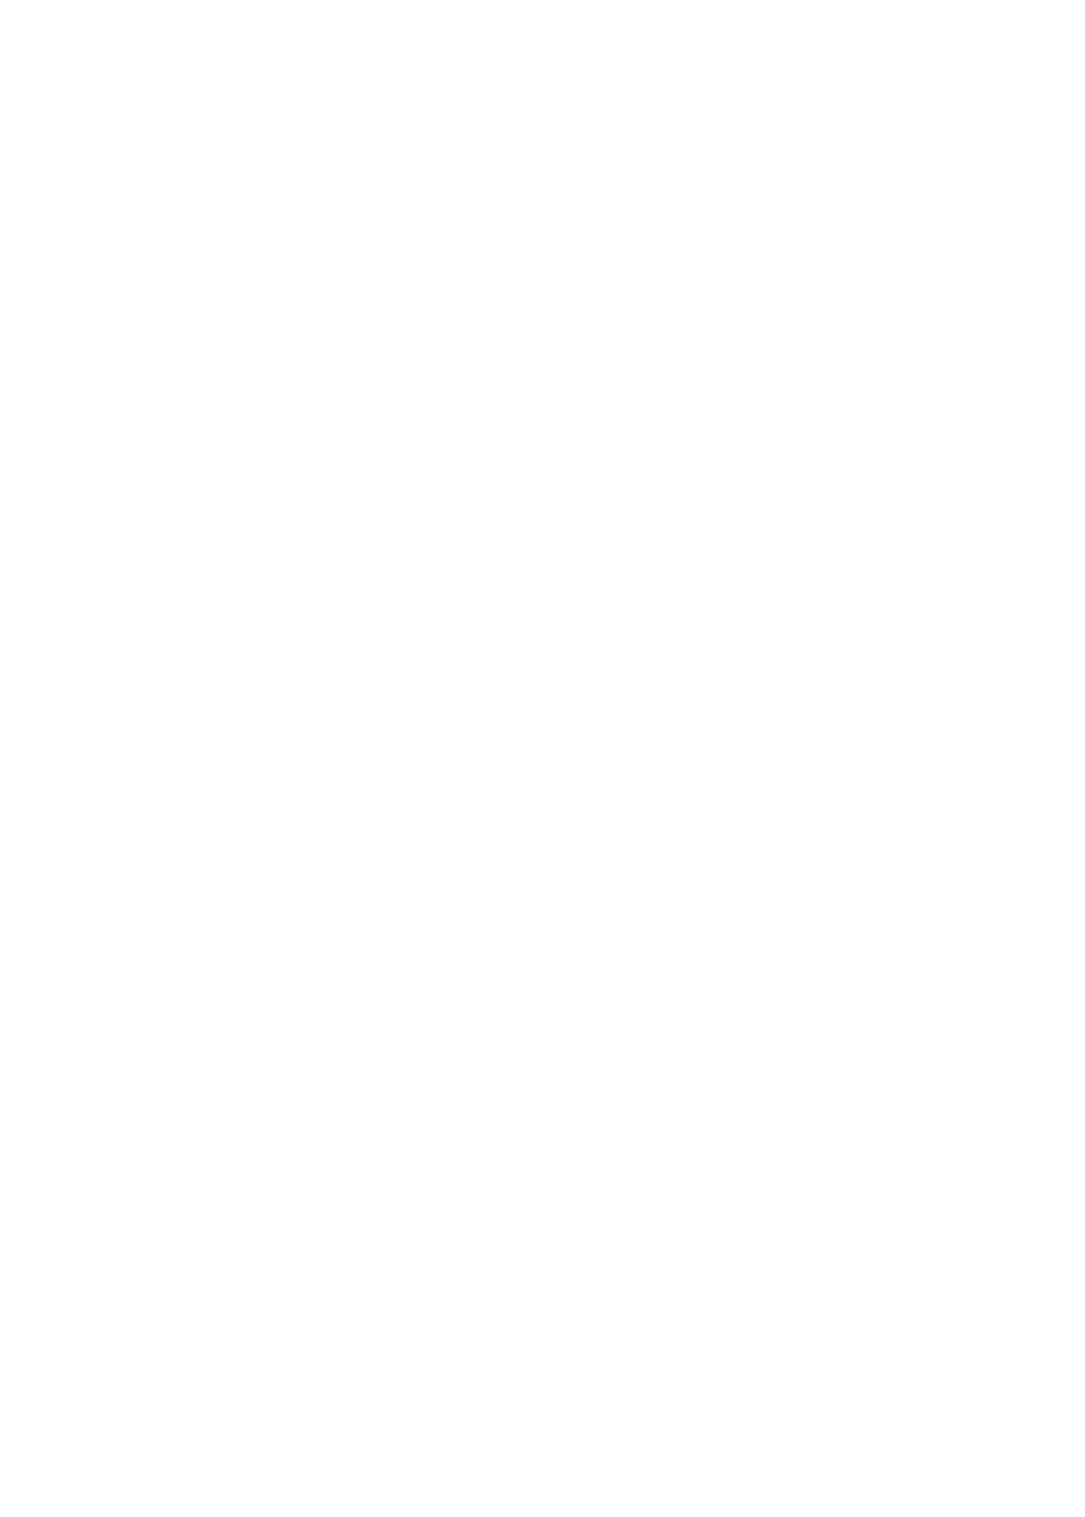 Spire Energy logo pour fonds sombres (PNG transparent)